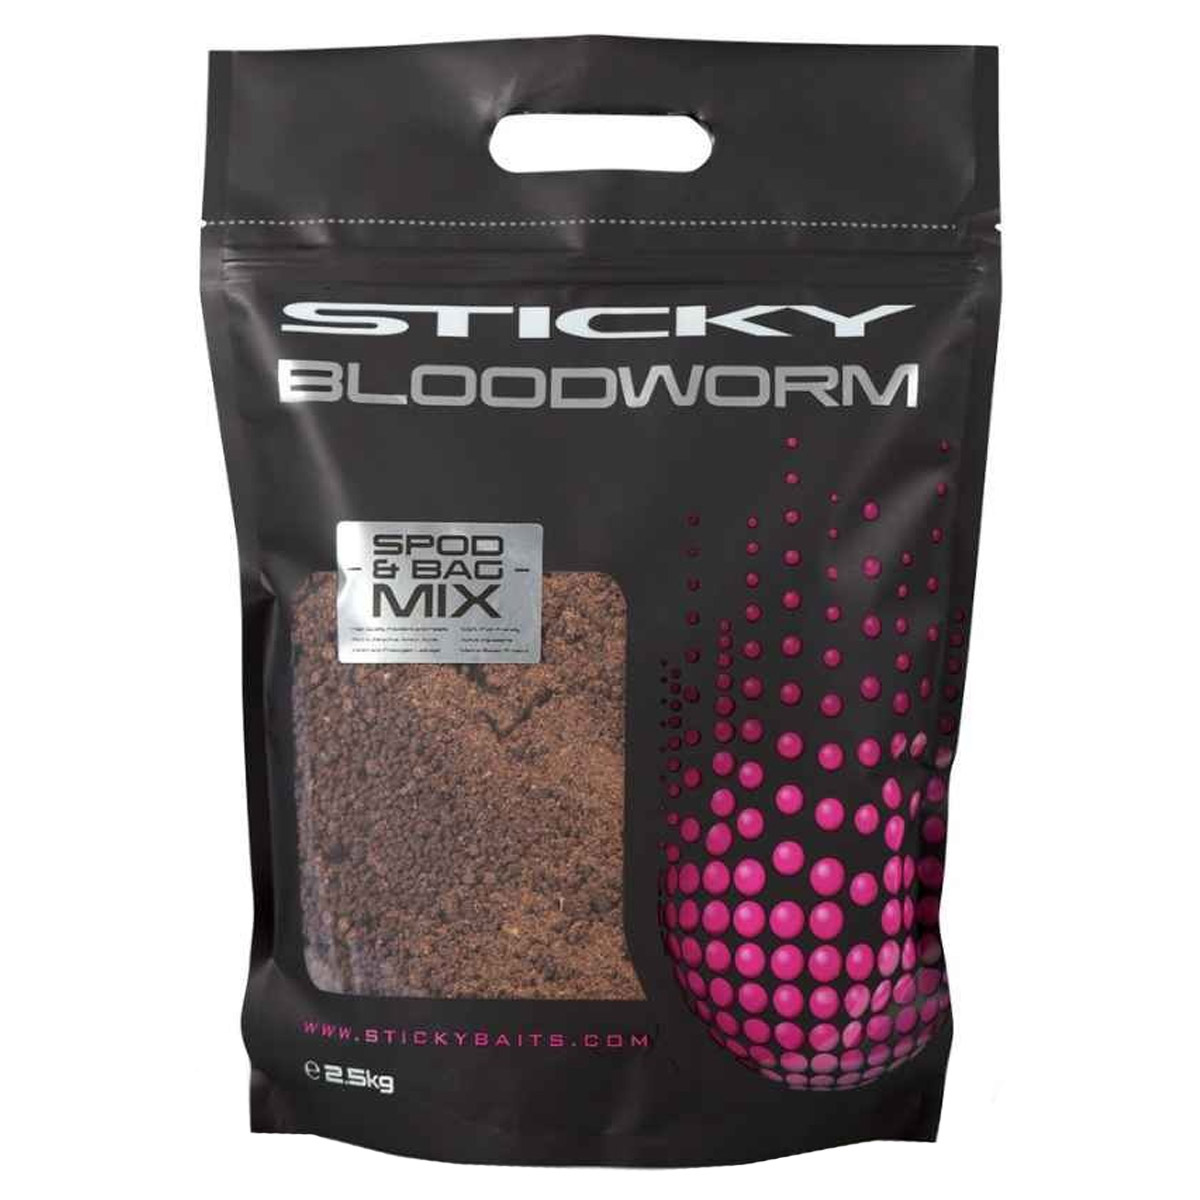 Sticky Baits Bloodworm Spod & Bag Mix 2,5 Kilo